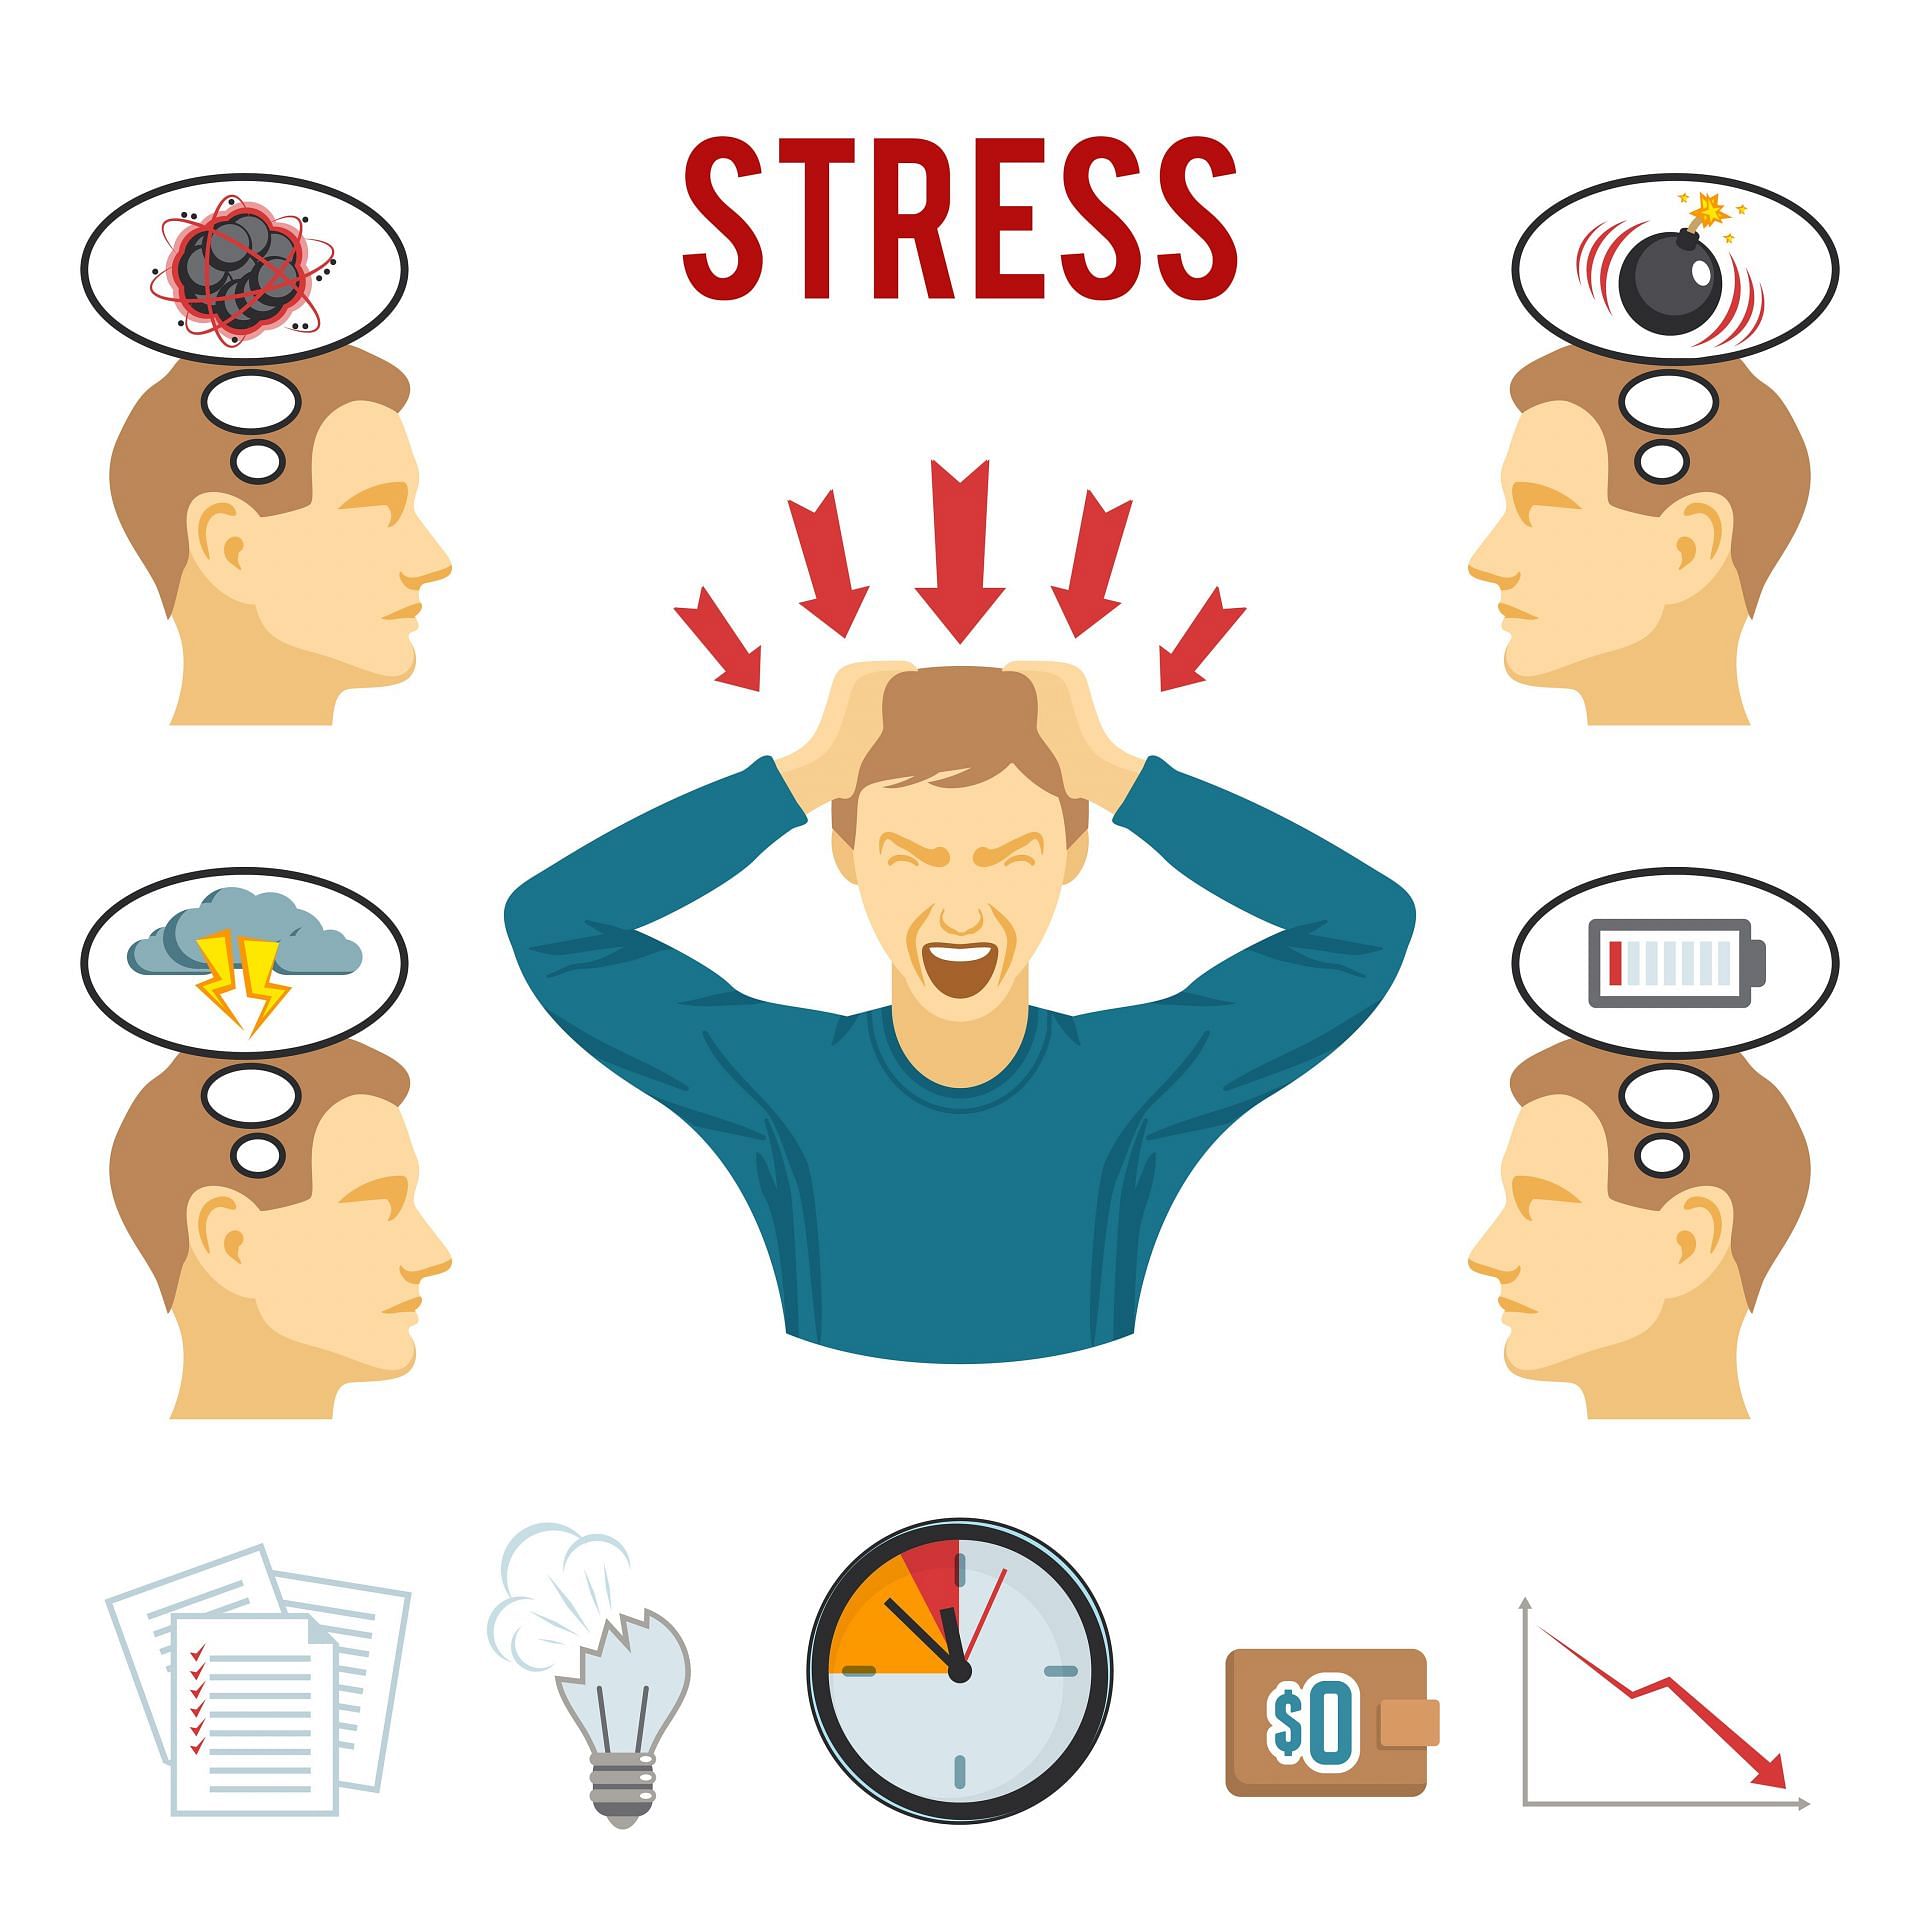 Sometimes stress management can involve removal of the stressor. (Image via Freepik/ Freepik)